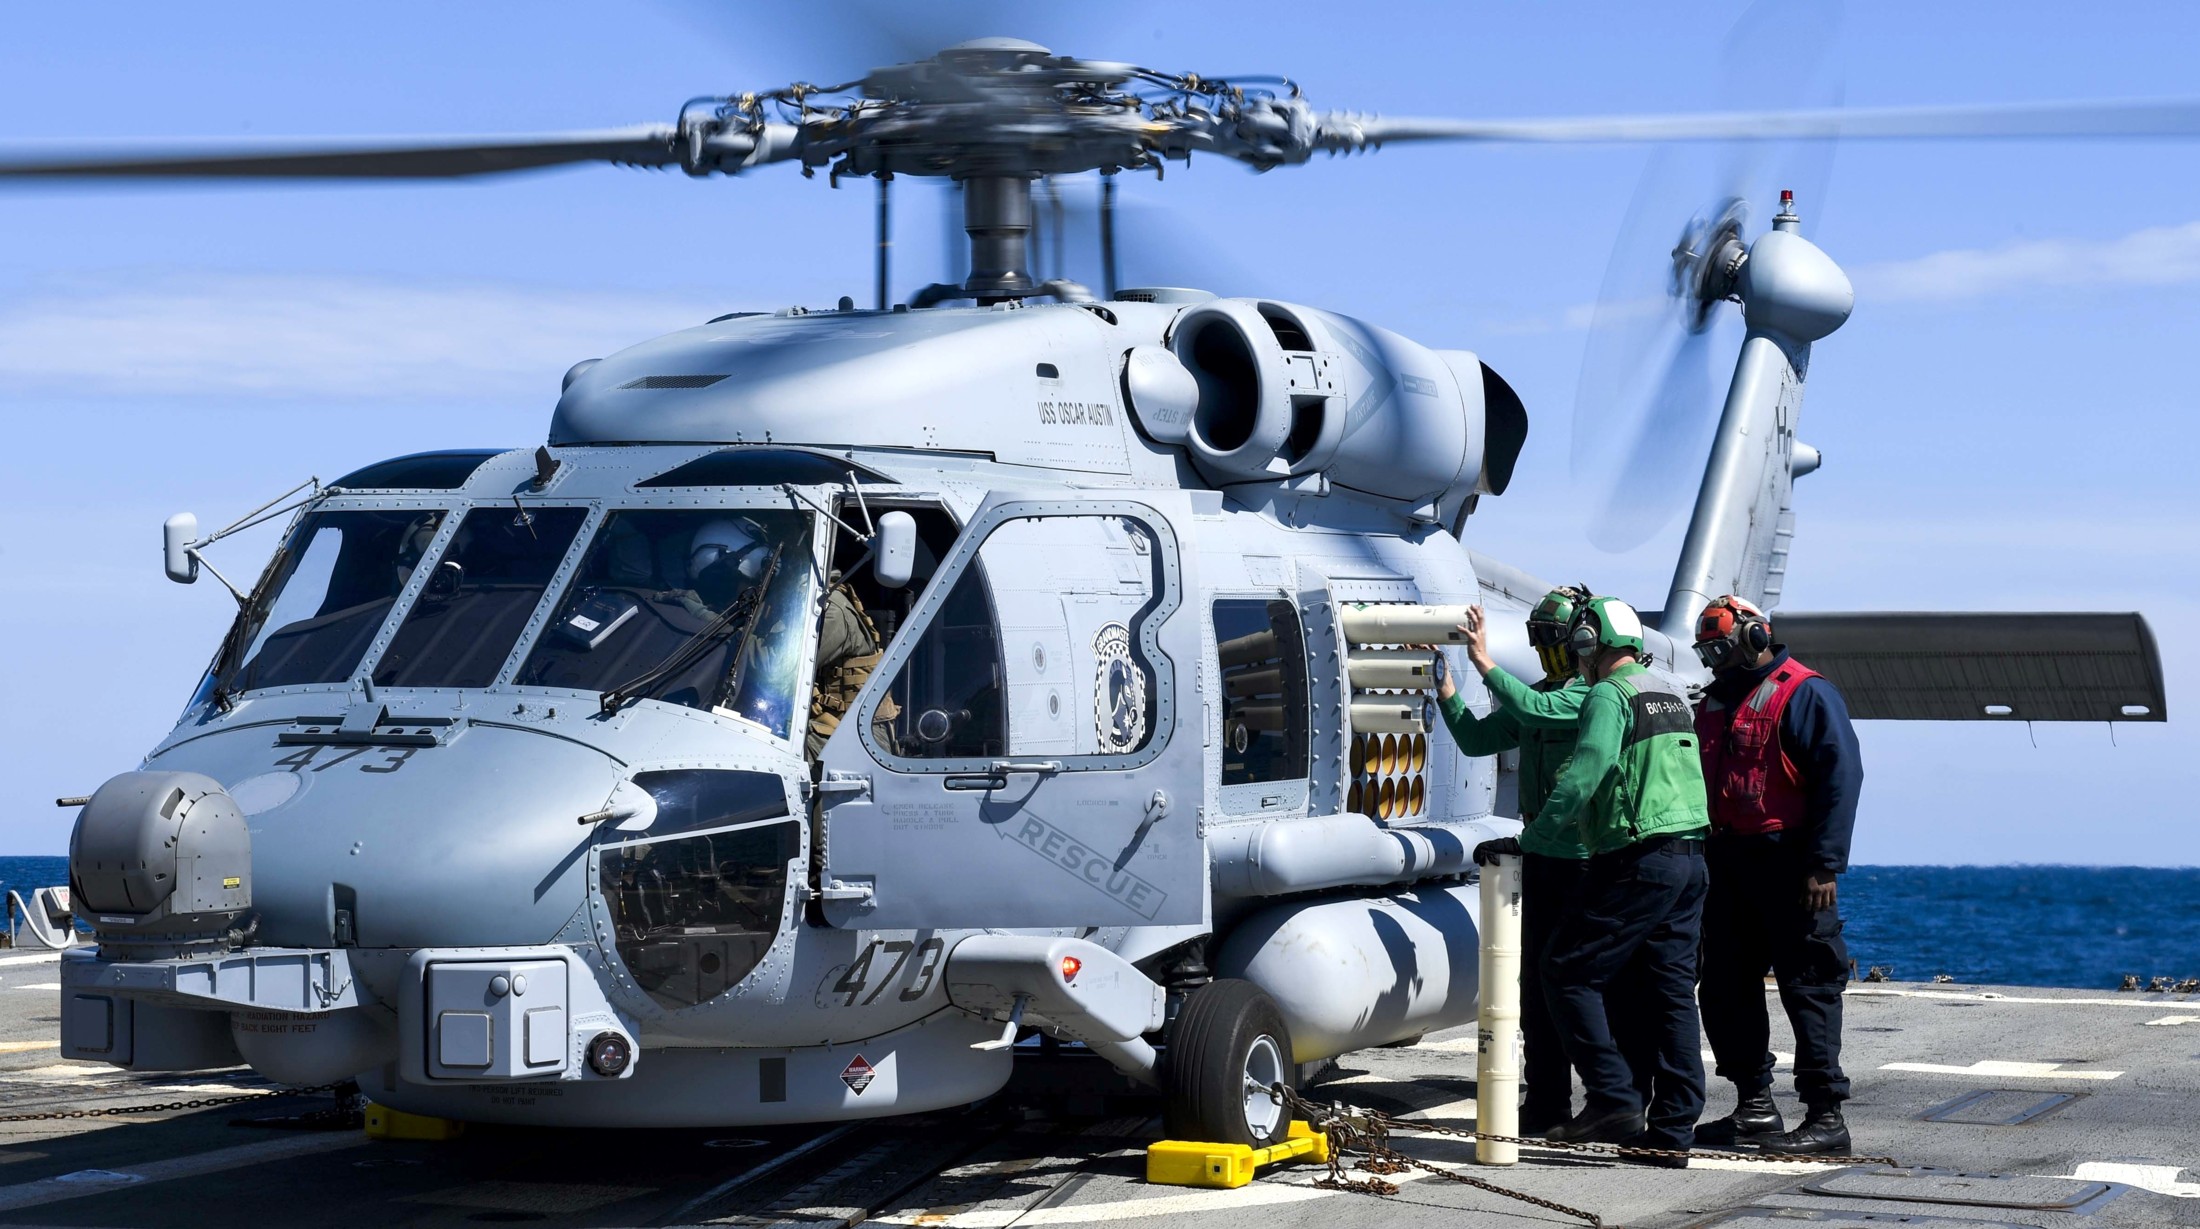 hsm-46 grandmasters helicopter maritime strike squadron helmarstrikeron us navy mayport florida mh-60r seahawk